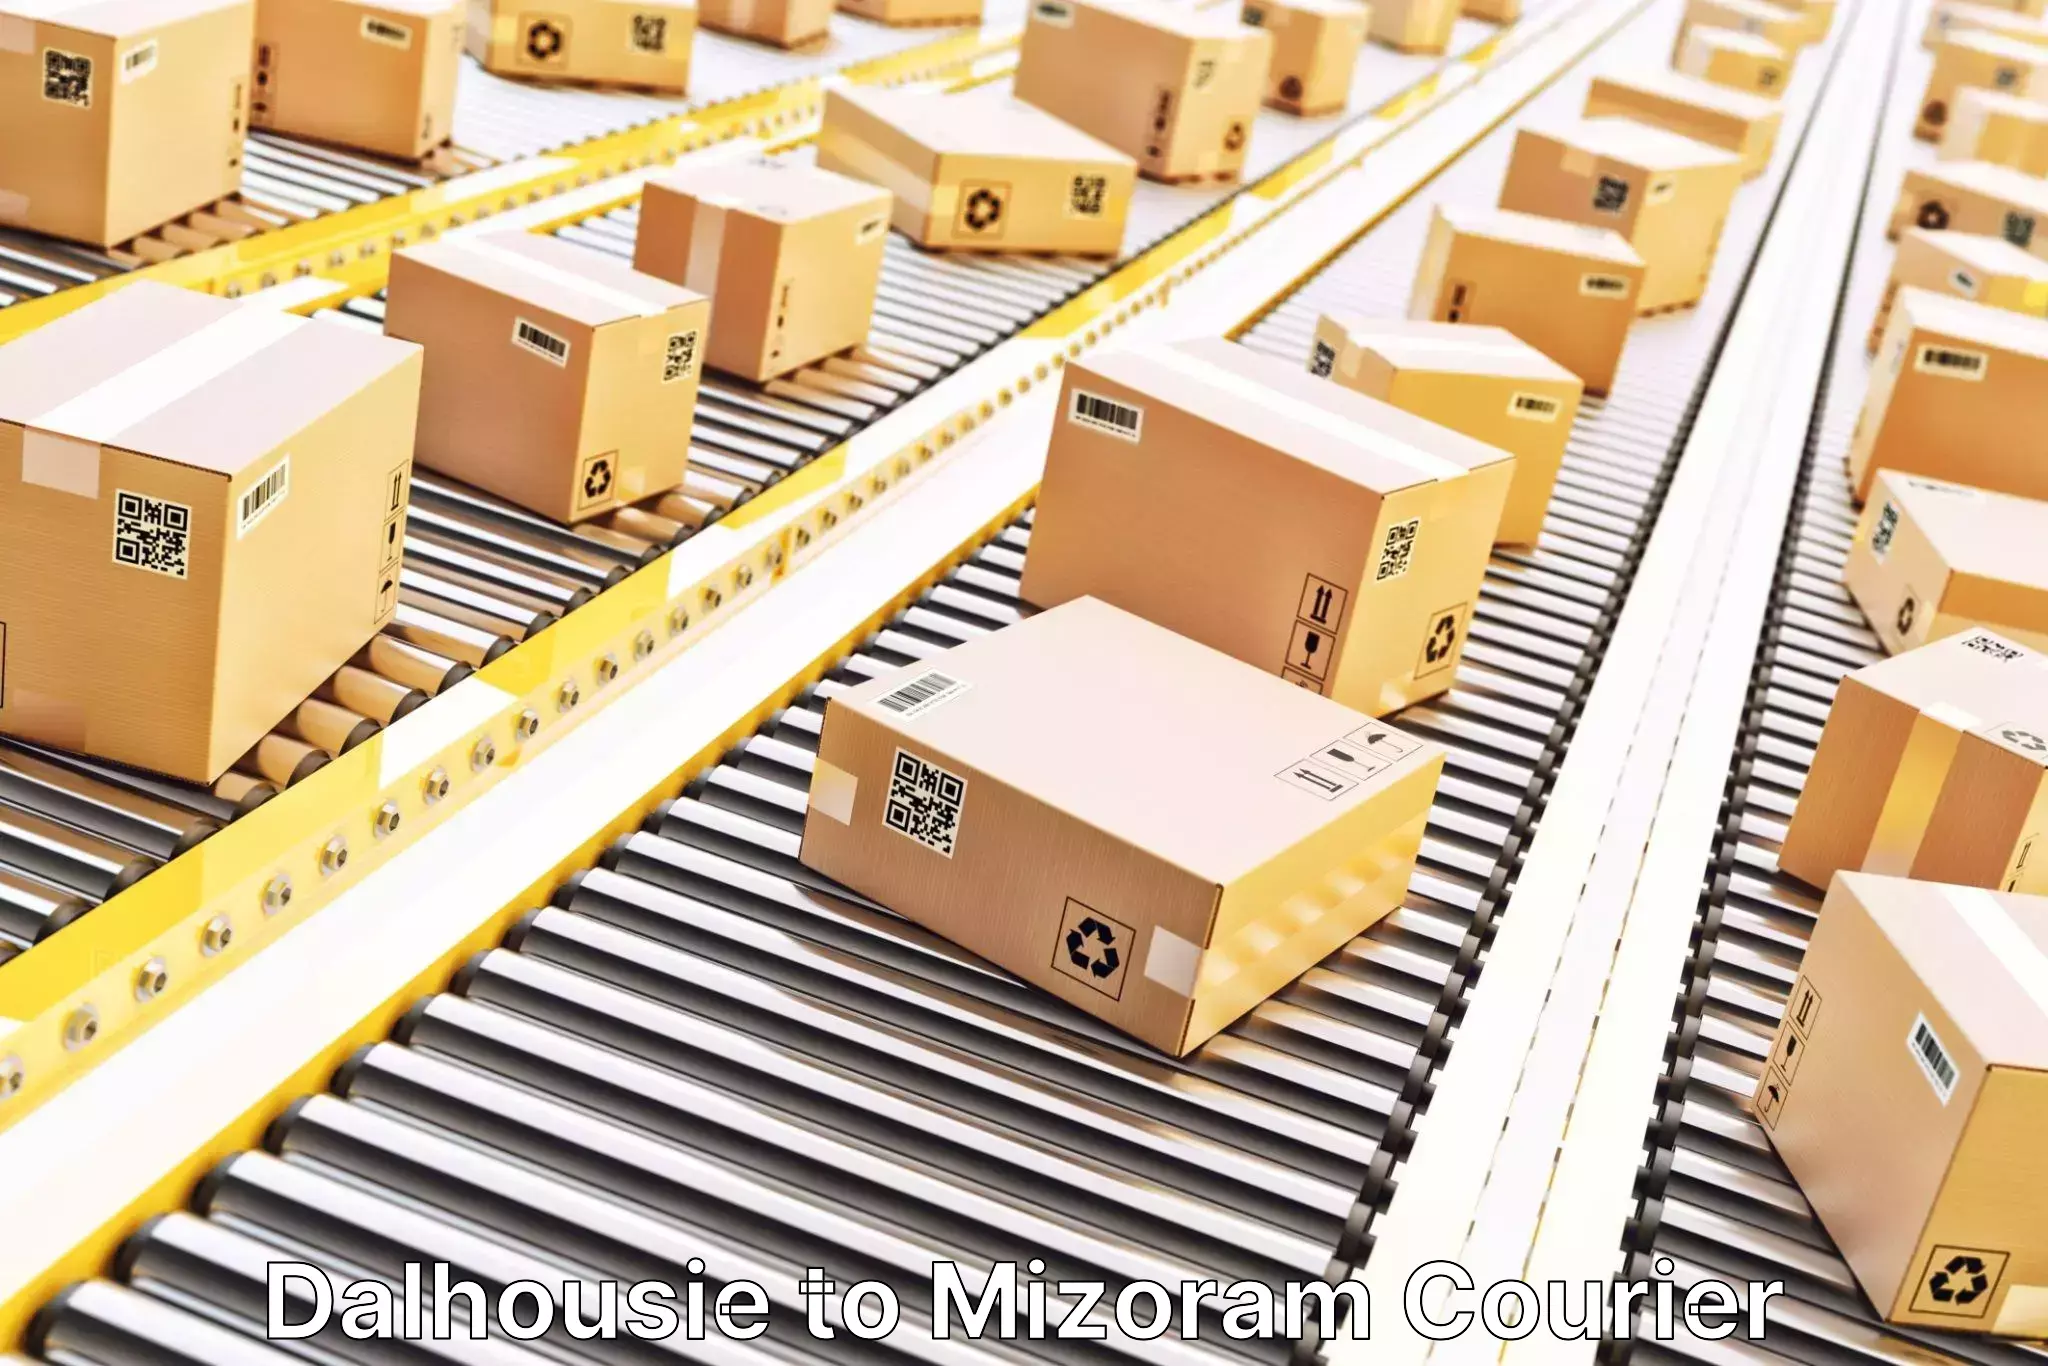 Parcel delivery automation Dalhousie to Mizoram